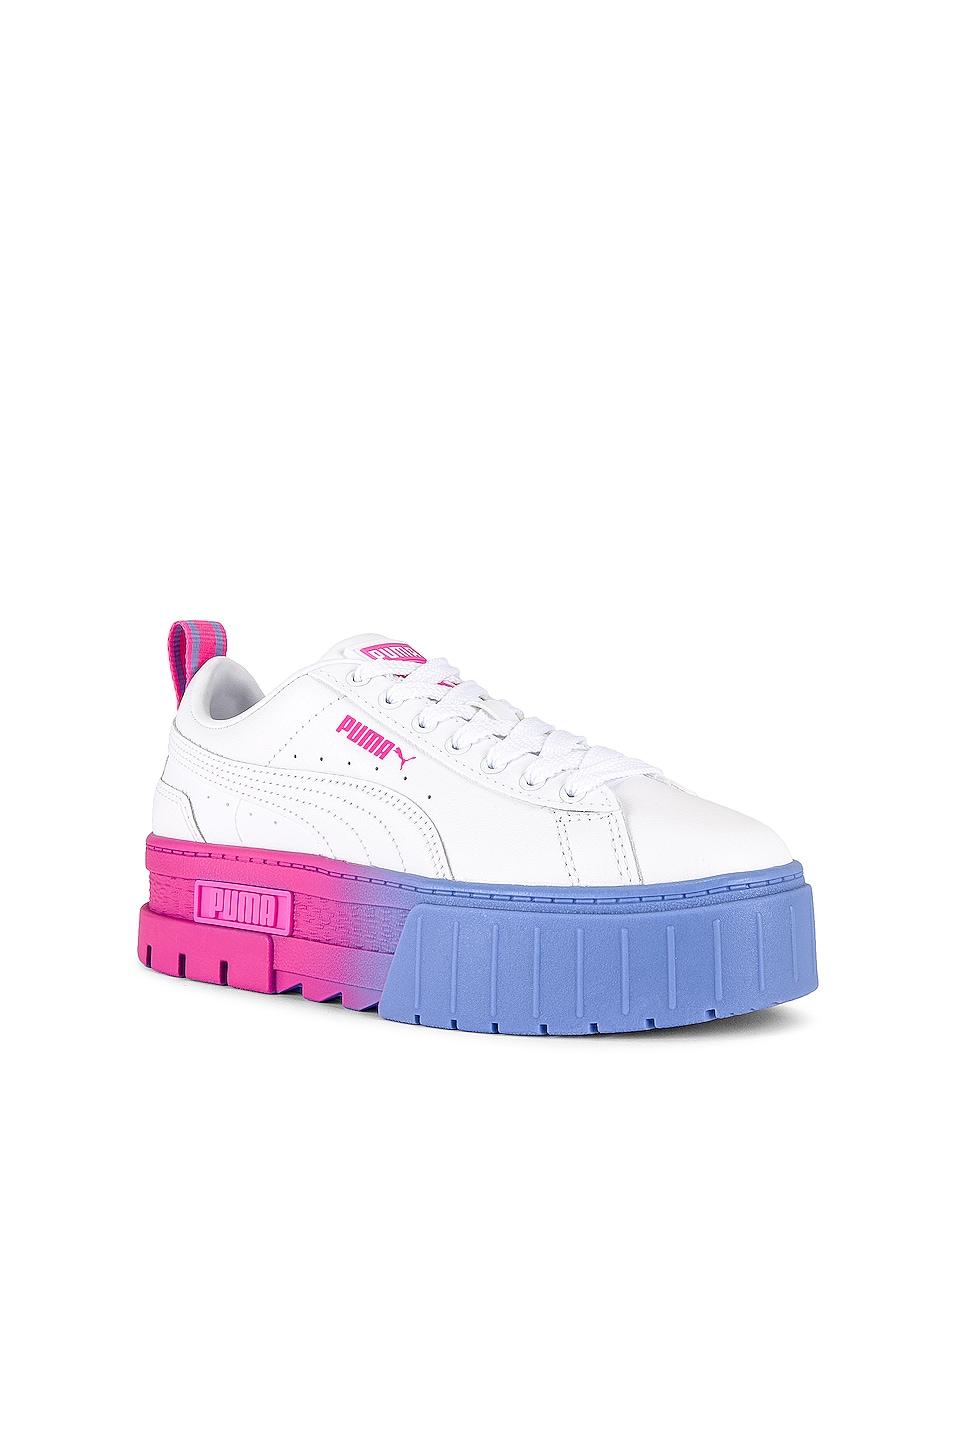 PUMA Mayze Fade Sneaker in Pink - Save 30% | Lyst